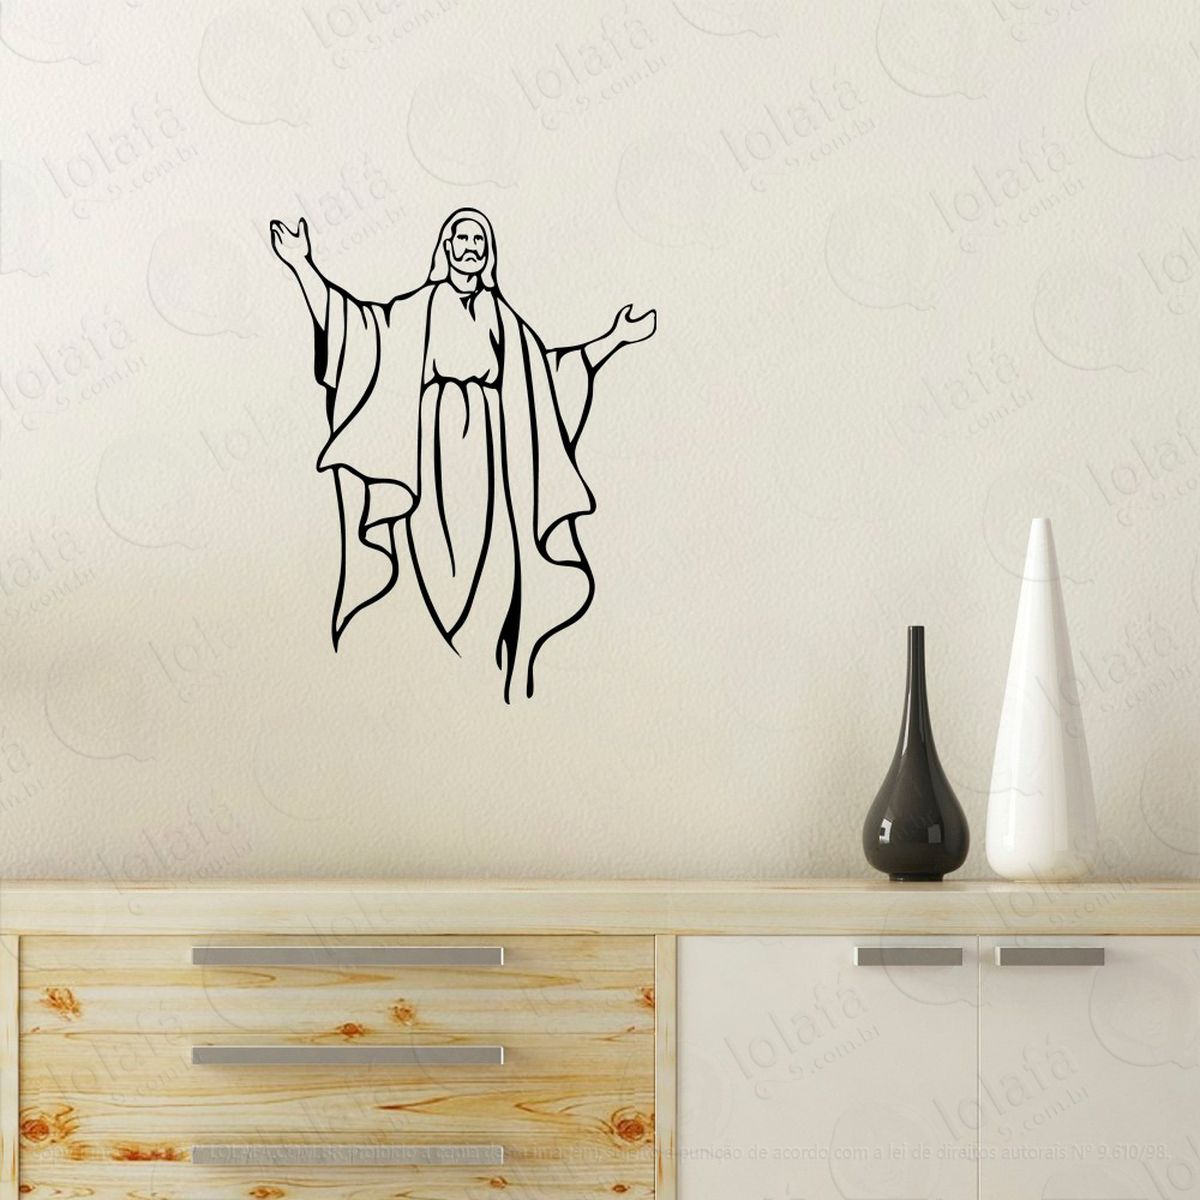 jesus cristo adesivo de parede decorativo para casa, quarto, sala e vidro - mod:15